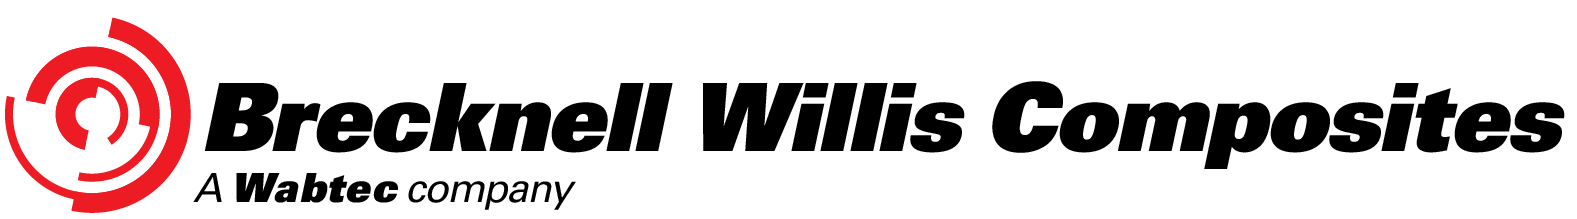 Wabtec Logo - Brecknell Willis Composites | Wabtec Corporation